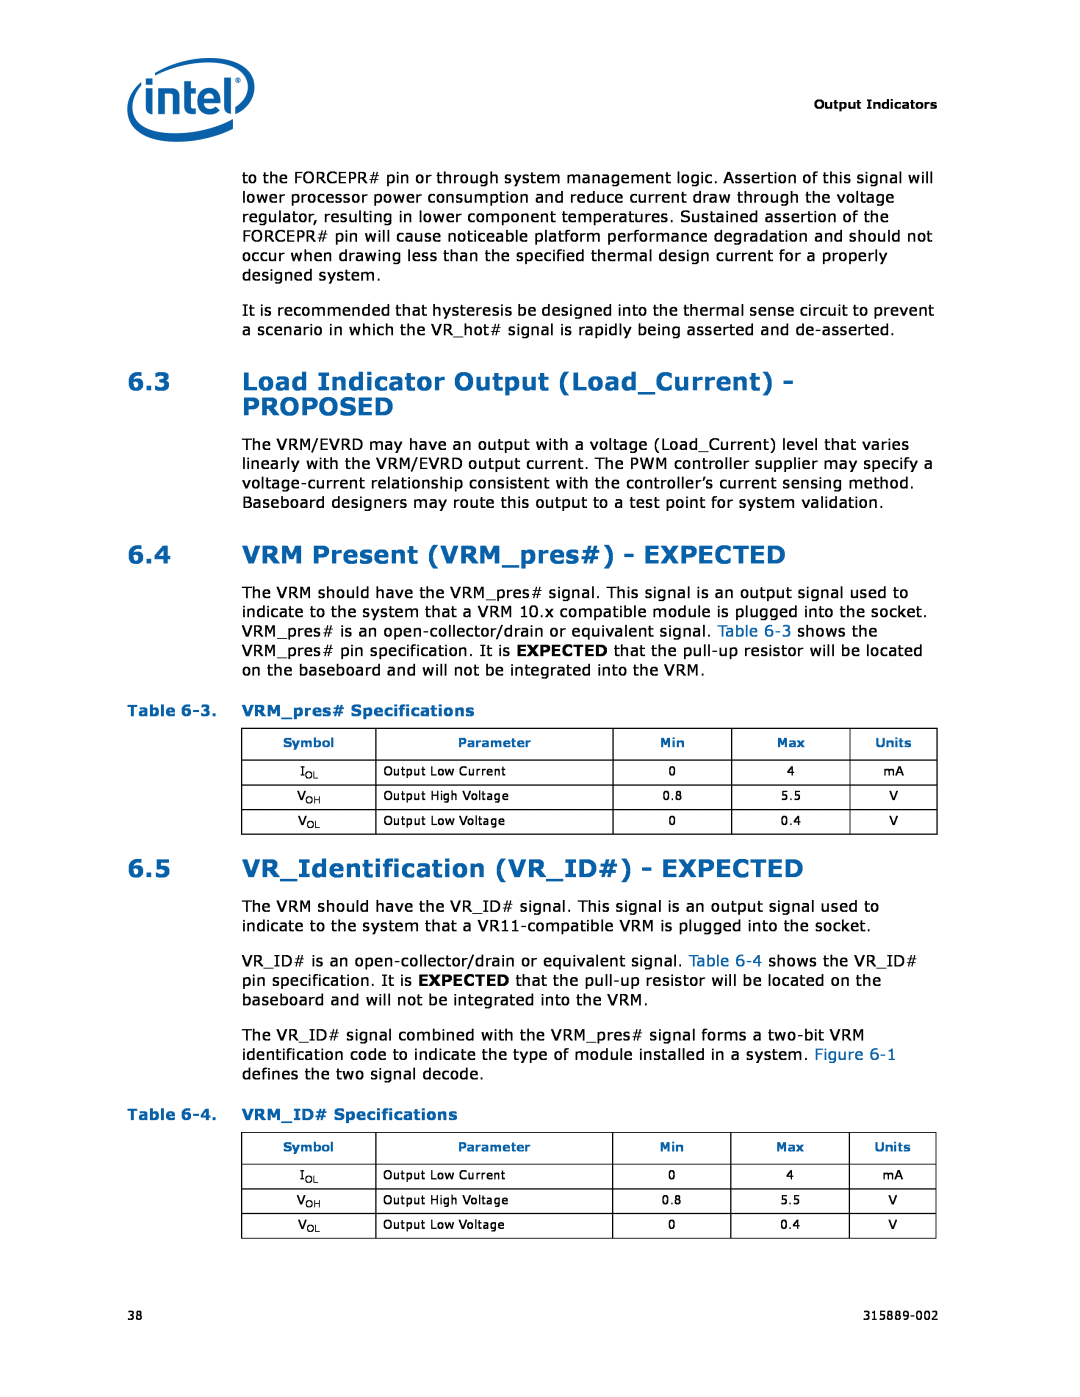 Intel 315889-002 manual 6.3Load Indicator Output Load Current PROPOSED, 6.4VRM Present VRM pres# - EXPECTED 